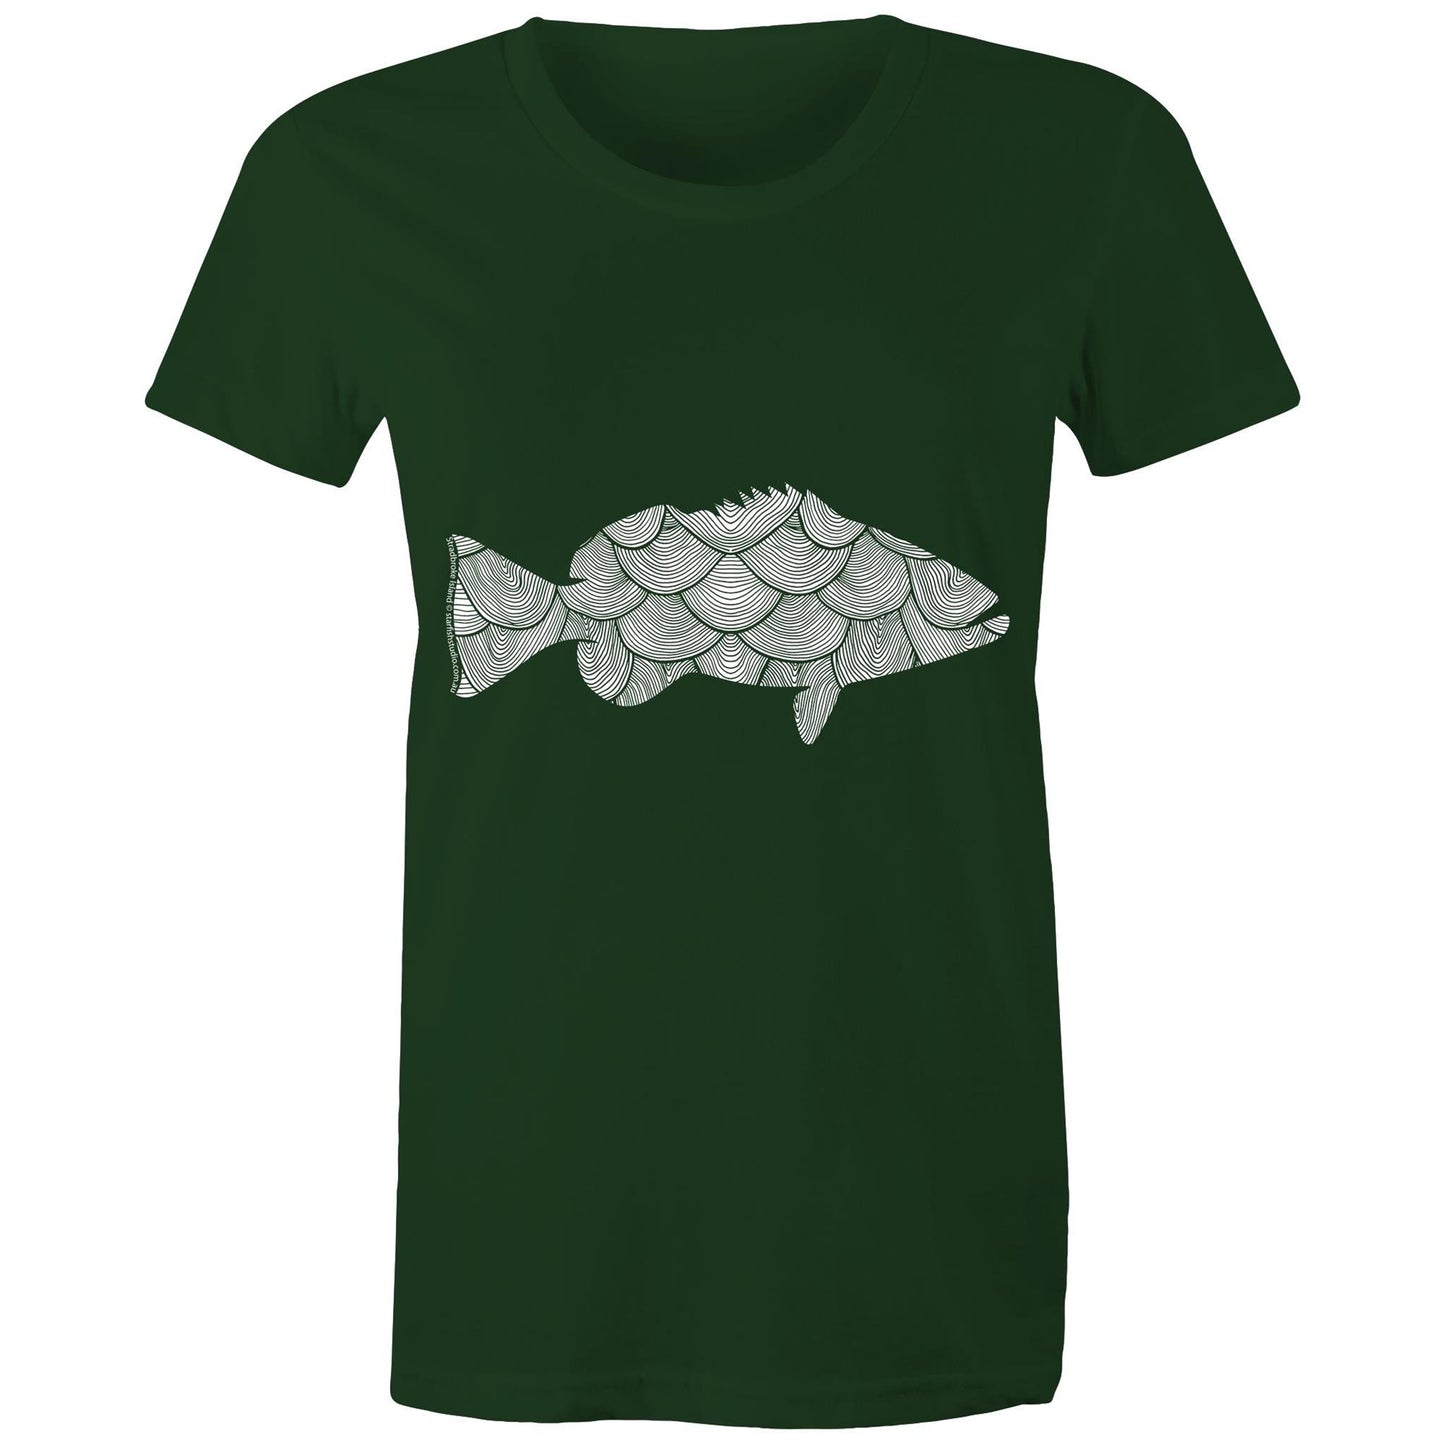 CUSTOM Ladies FISH T shirt AS Colour - Women's Maple Tee